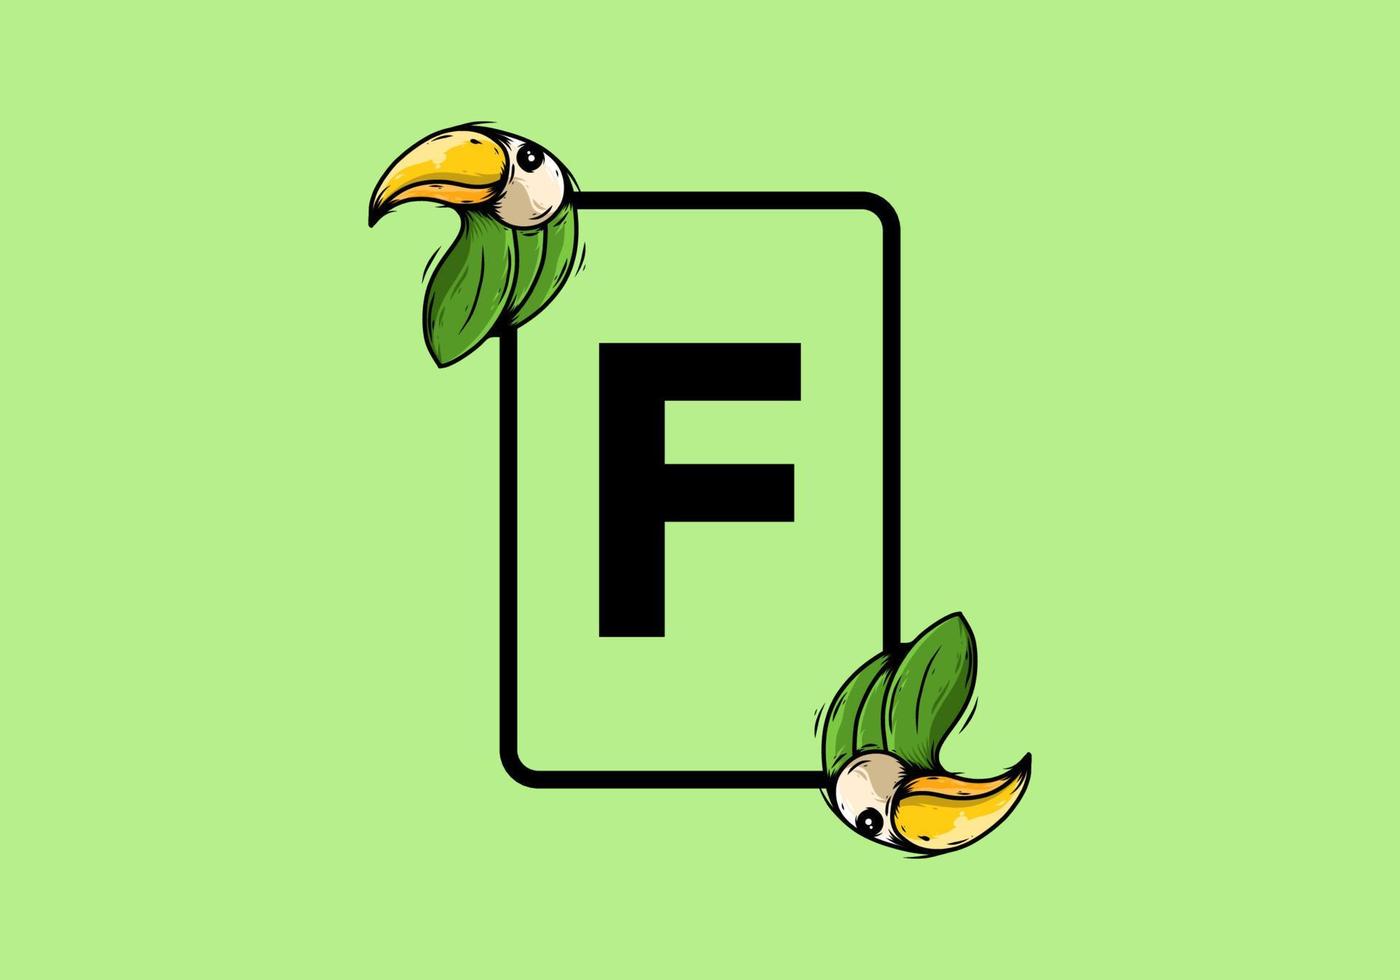 grüner vogel mit f anfangsbuchstaben vektor